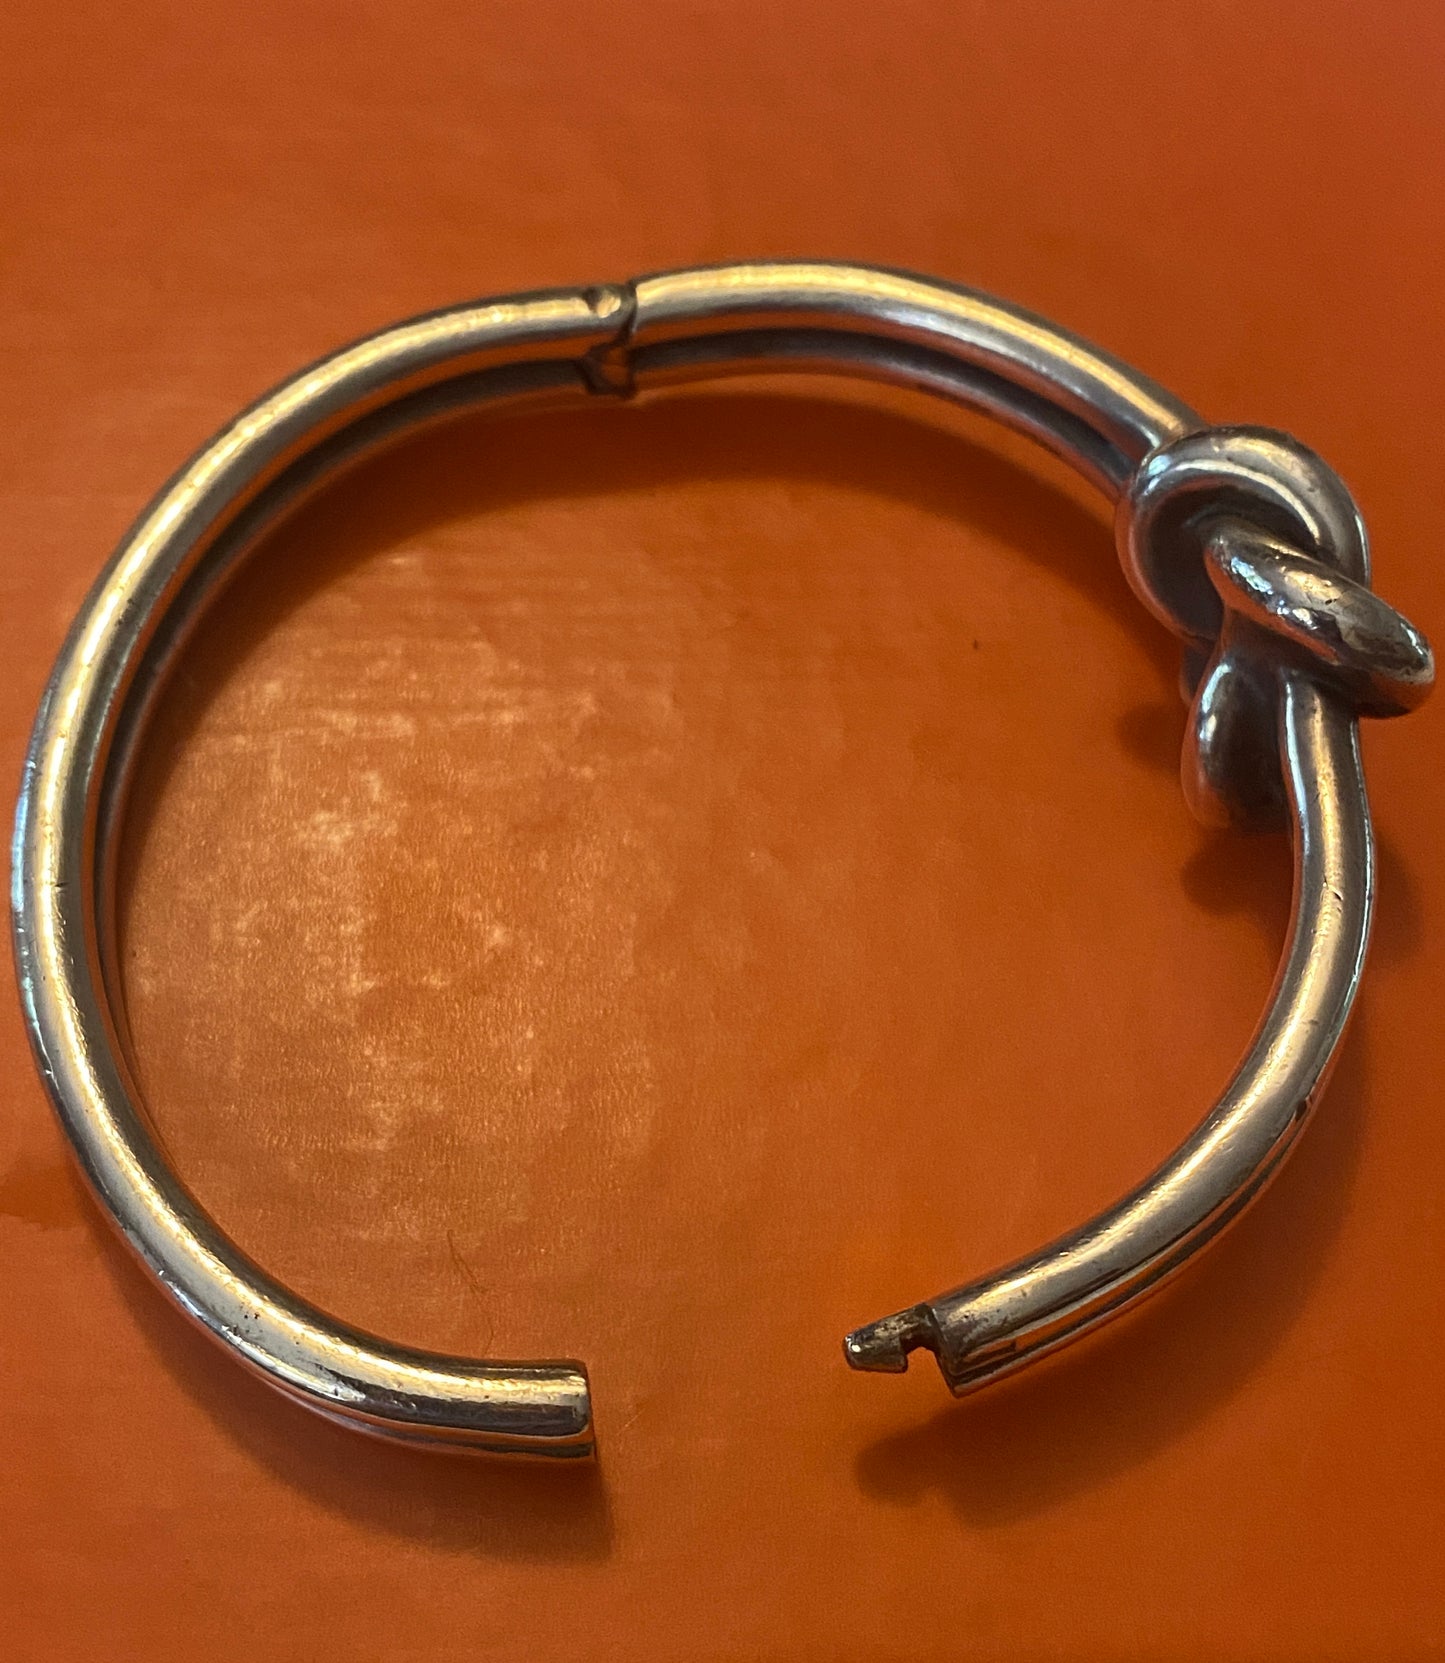 Pre-Owned Sterling Silver Wide Cuff Bracelet